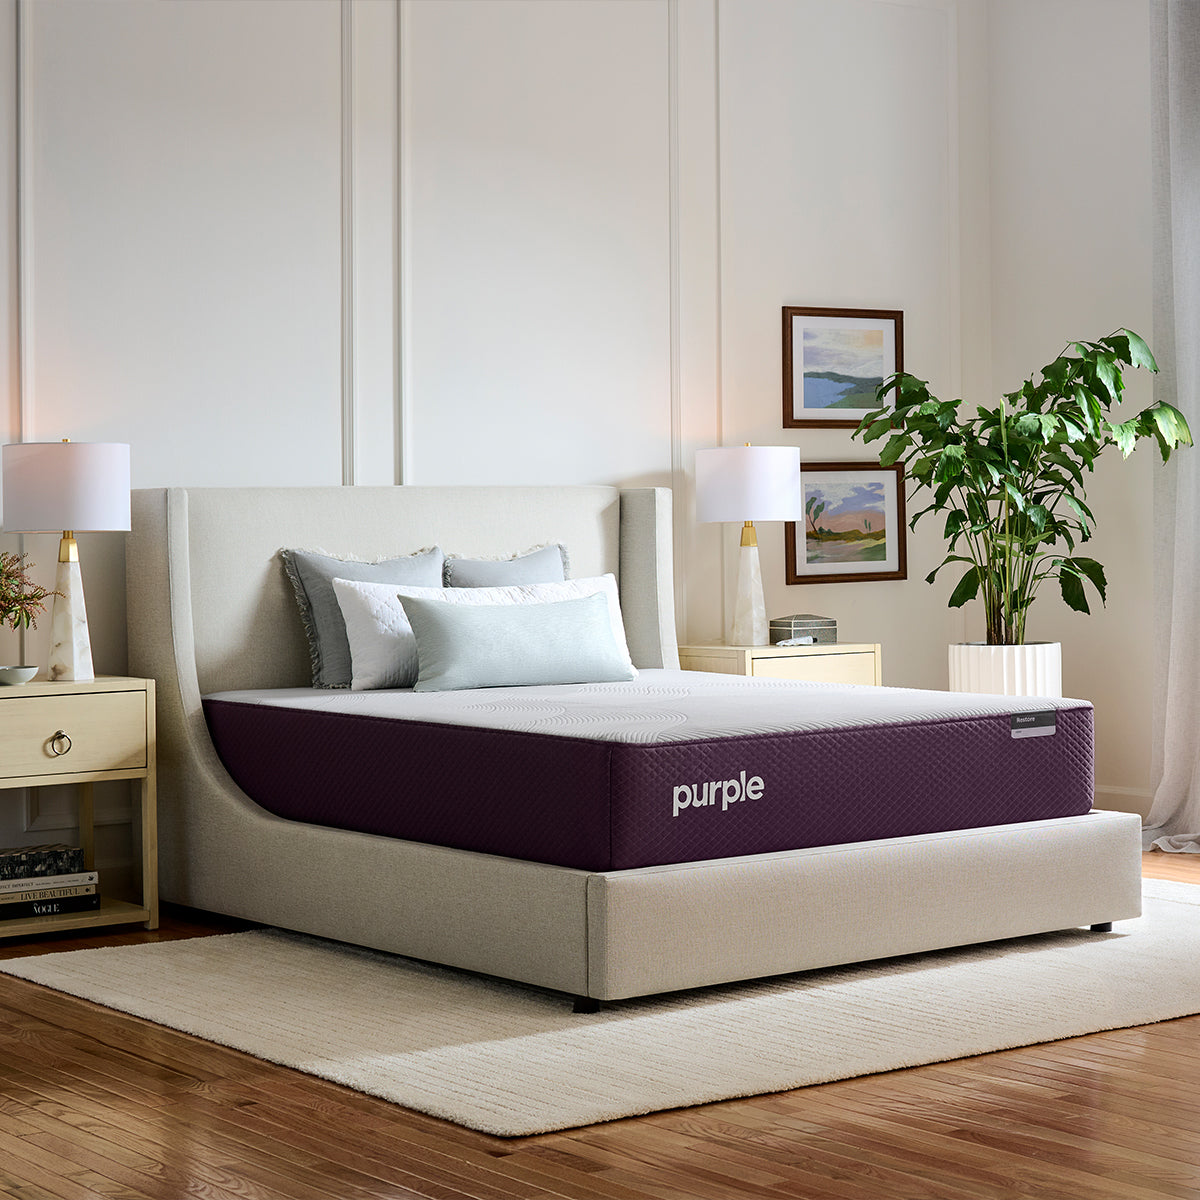 Purple Restore Soft Mattress in bedroom